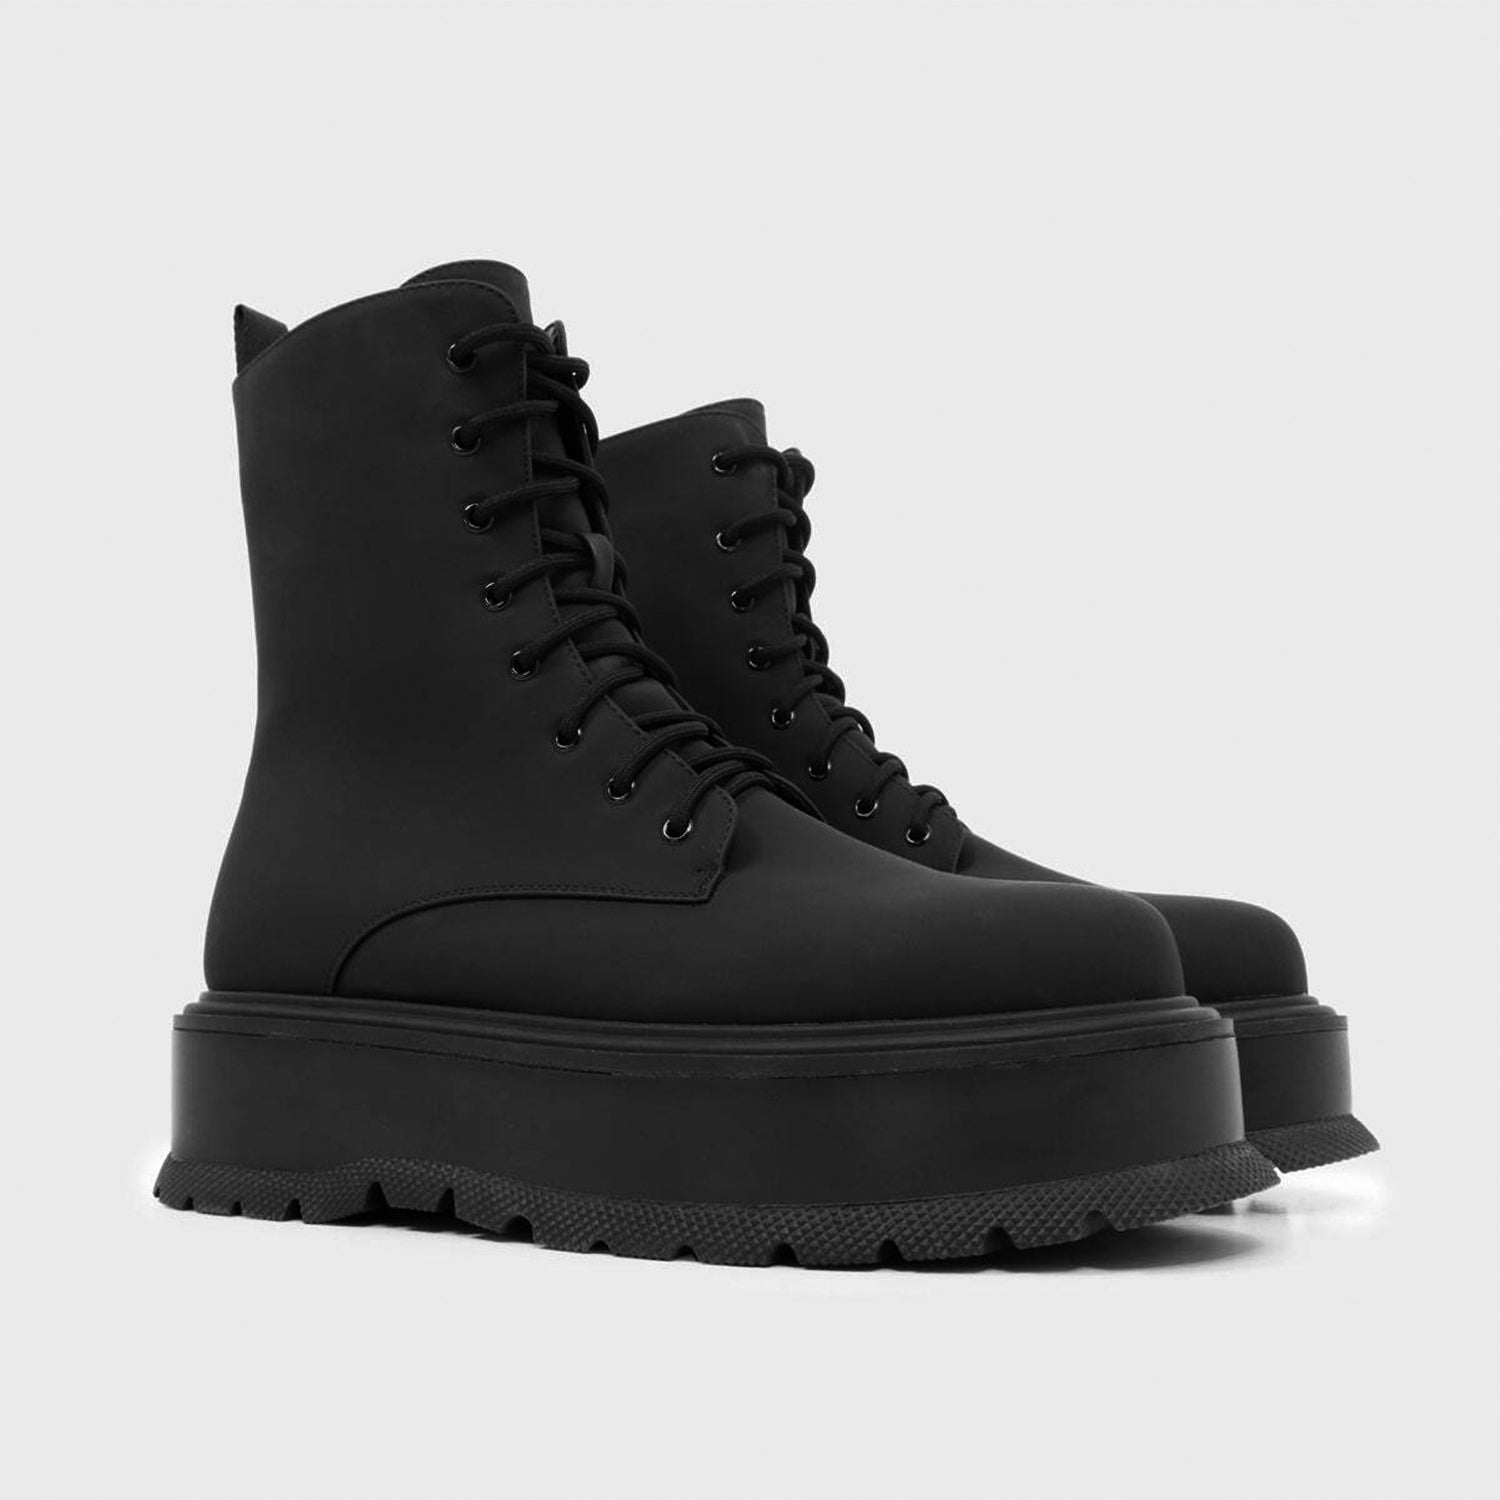 Foundry Men's Platform Ankle Boots - Ankle Boots - KOI Footwear - Black - Side Platform View